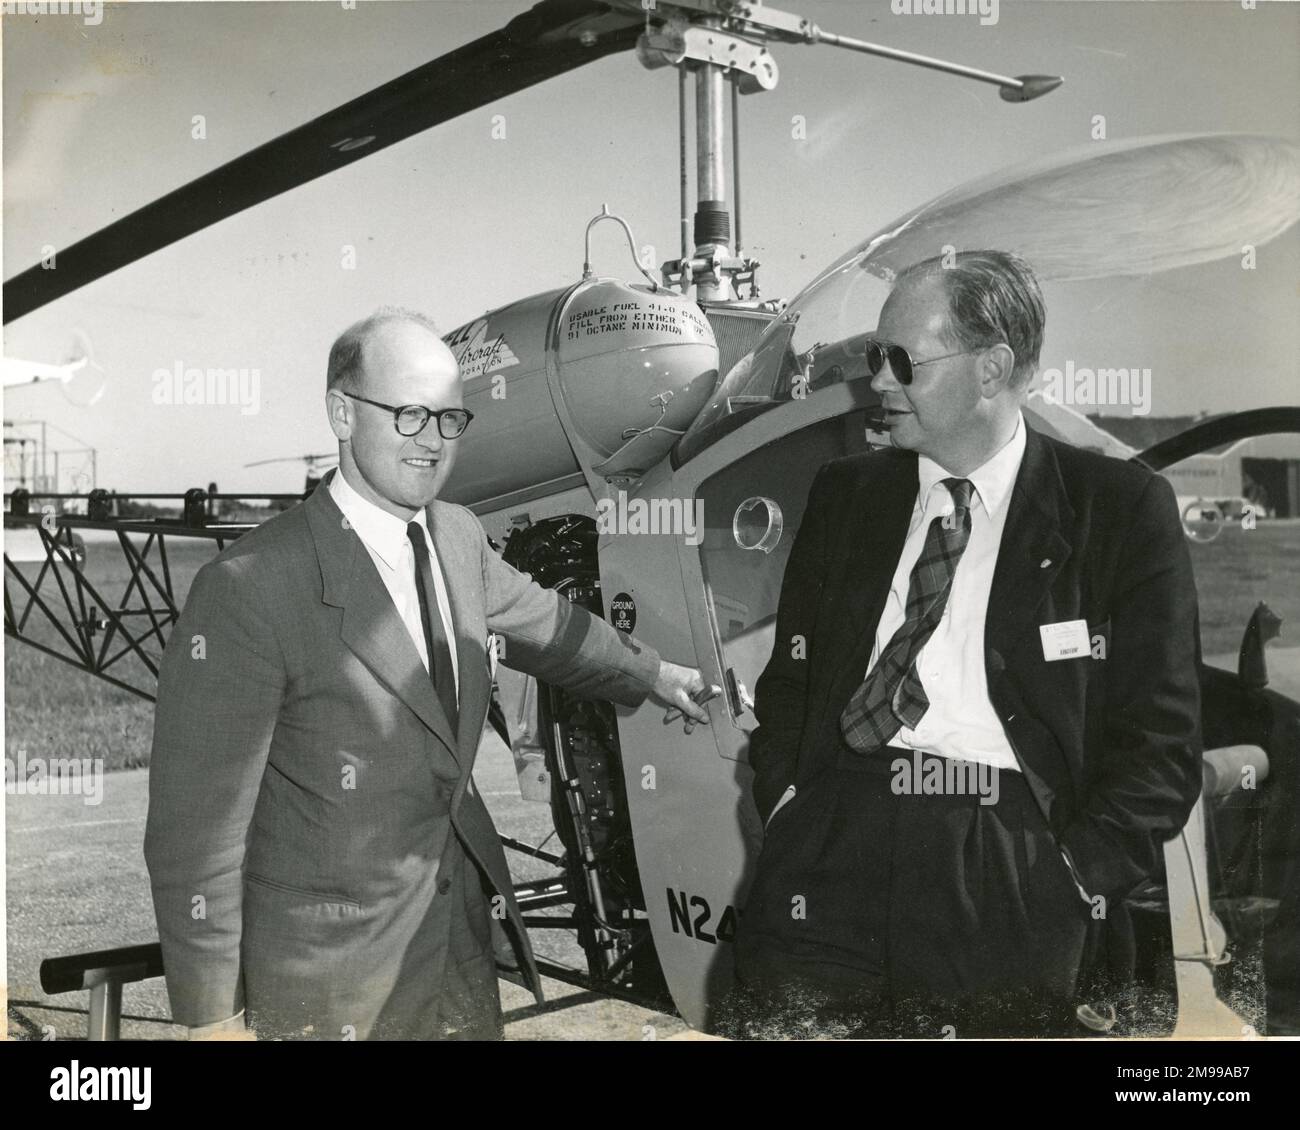 Robert Herbert Whitby, 1917-2015, left, with Jack Caulson alongside a Bell 47, circa 1955. Stock Photo